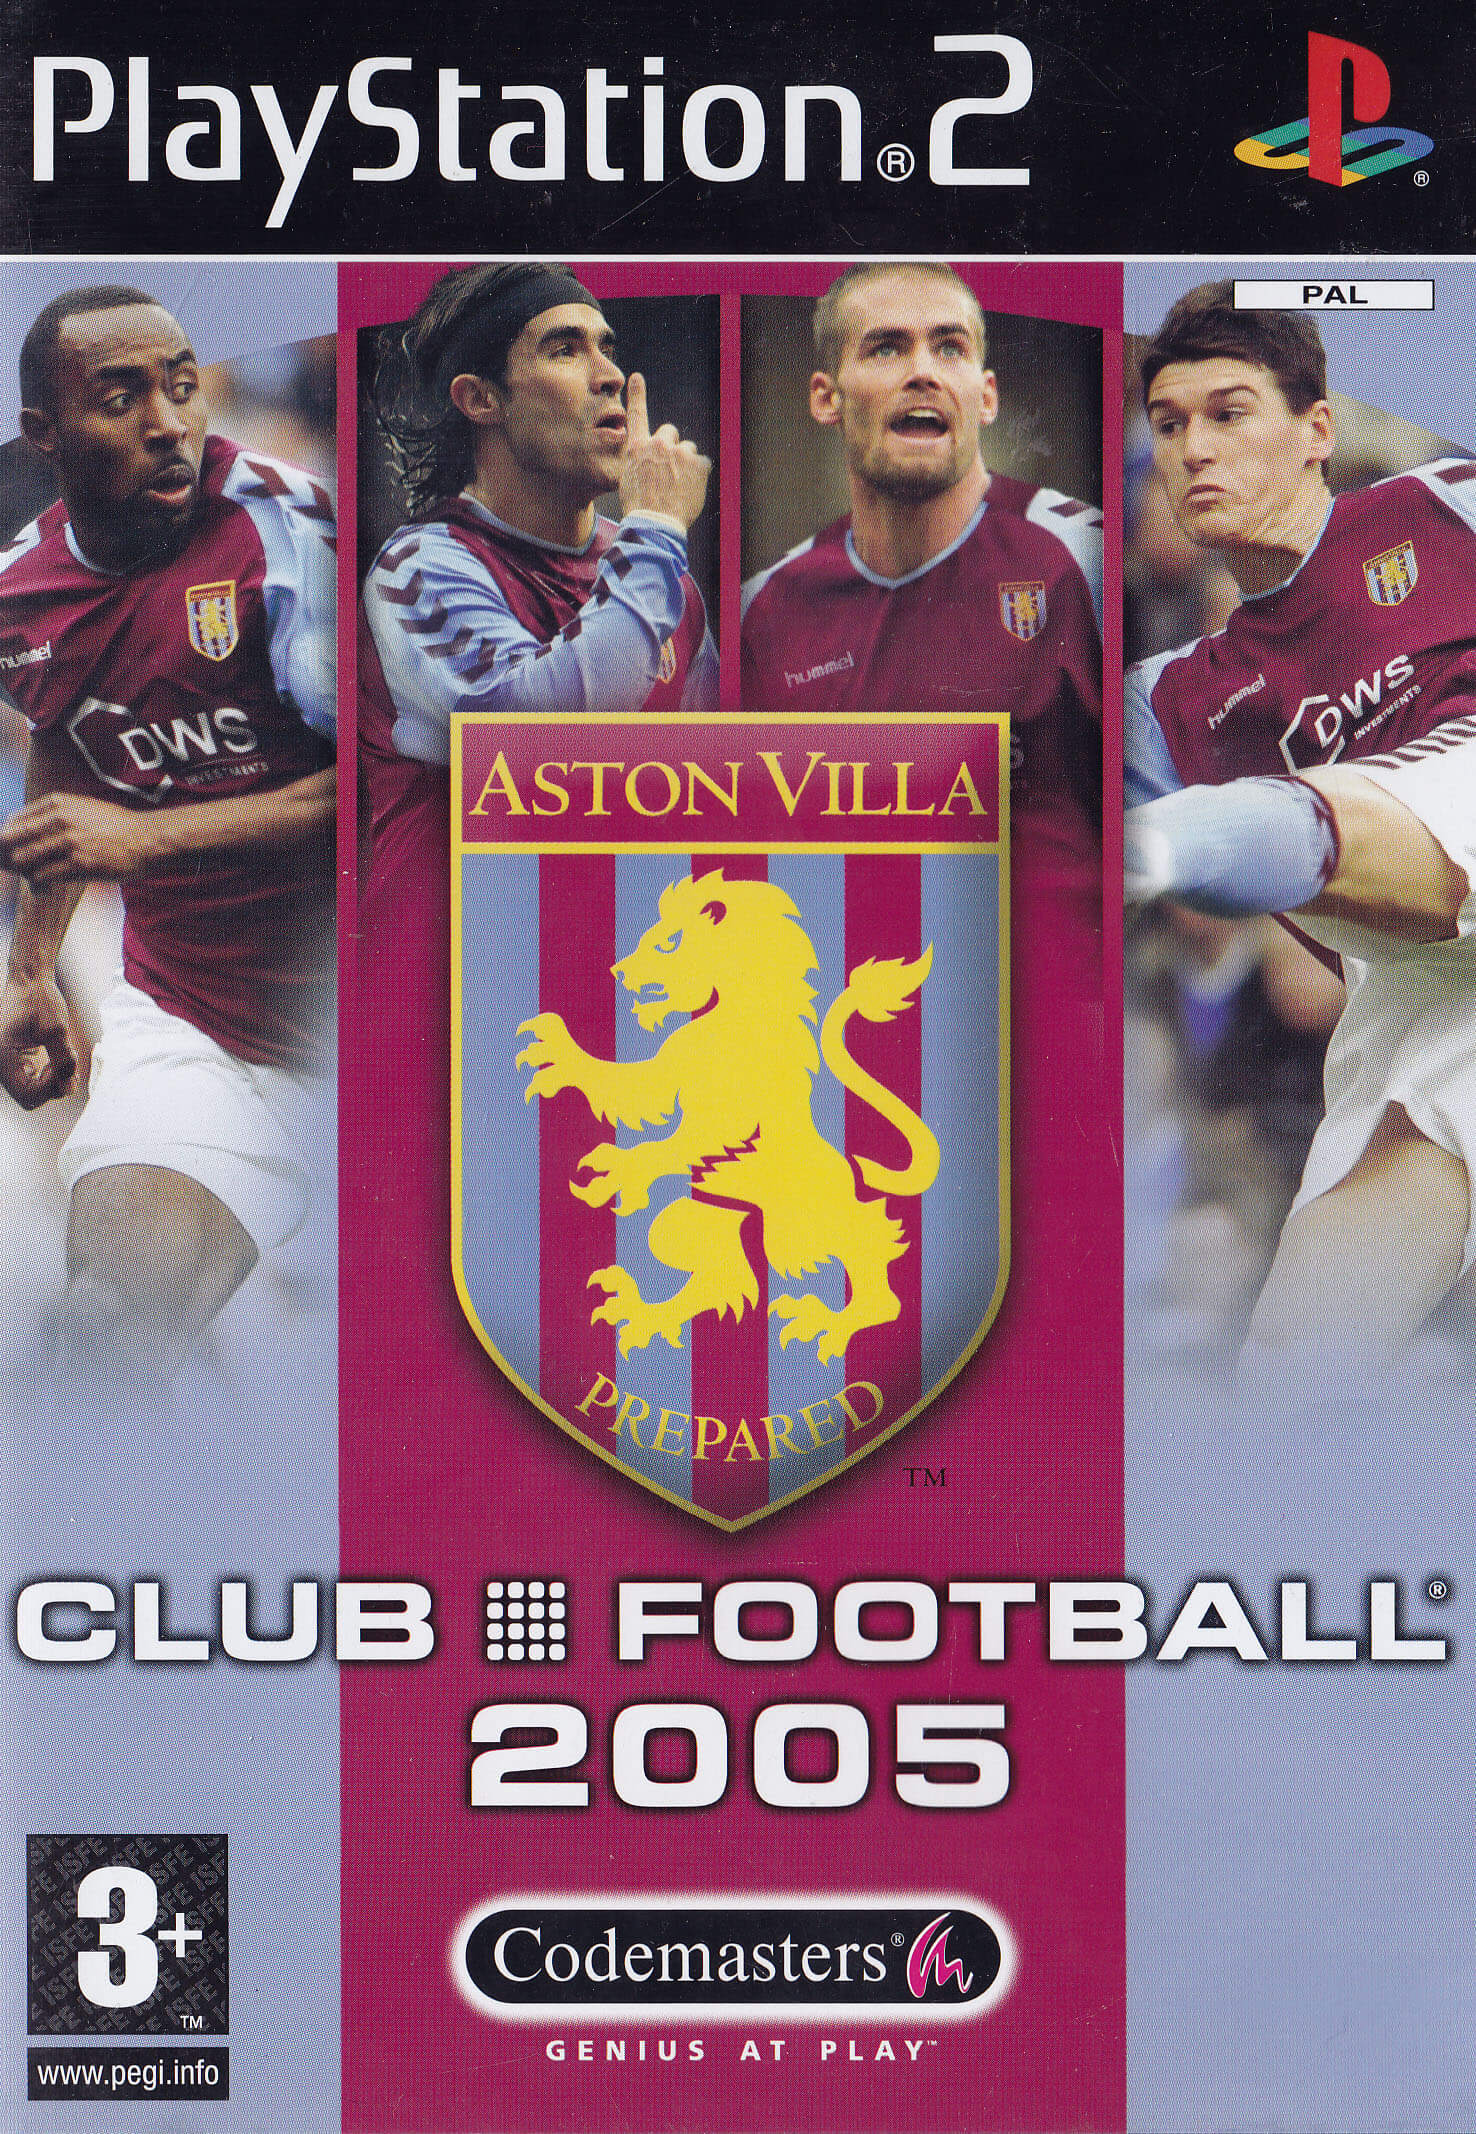 Club Football 2005: Aston Villa FC